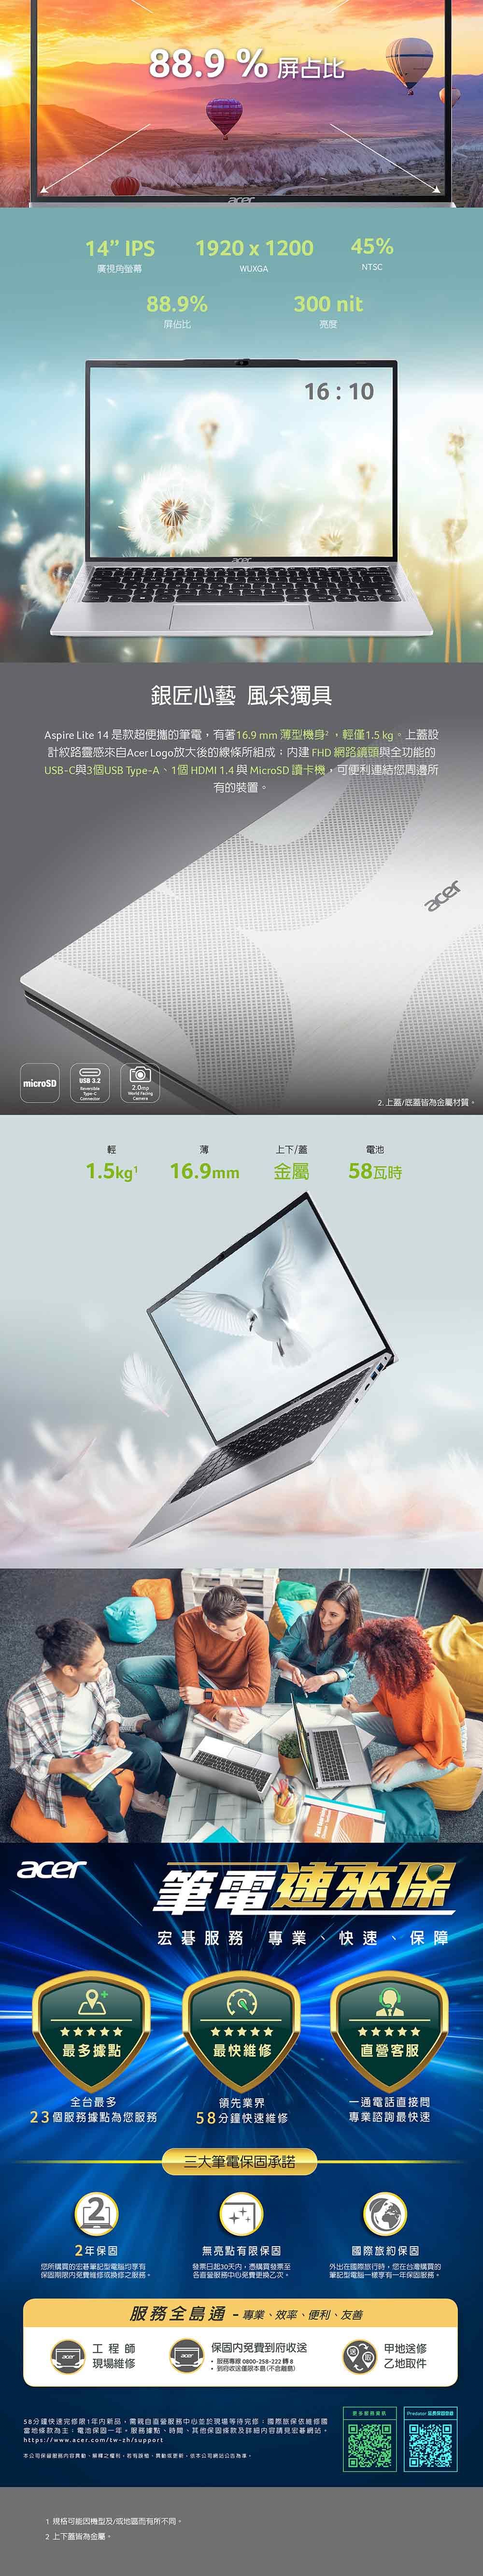 14 IPS廣視角螢幕88.9 % 屏占比190  120088.9%WUXGA45%300 nitNTS屏佔比acer亮度1610銀匠心藝 風采獨具Aspire Lite 14 是款超便攜的筆電有著16.9mm 薄型機身,輕僅1.5 kg上蓋設計紋路靈感來自Acer Logo放大後的線條所組成; FHD 網路鏡頭與全功能的USBC與3個USB -A1個HDMI 1.4 與 MicroSD 讀卡機,可便利連結您周邊所有的裝置。microSDUSB3.2ReversibleType-CConnectorWorld Facing2.0mpacer2.上蓋/底蓋皆為金屬材質。薄上下/蓋電池1.5kg16.9mm金屬58瓦時acer筆電速來保宏碁 專業快速保障最多據點最快維修直營客服全台最多領先業界一通電話直接問23個服務據點為您服務58分鐘快速維修專業諮詢最快速三大筆電承諾22年保固您所購買的宏碁筆記型電腦均享有保固期限免費維修或換修之服務。無亮點有限保固發票日起30天內,憑購買發票至各直營服務中心免費更換乙次。國際旅約保固外出在國際旅行時,您在台灣購買的筆記型電腦一樣享有一年保固服務。服務全島通-專業效率、便利、友善保固內免費到府收送工程師現場維修 服務專線 0800-258-222 轉8 到府收送僅限本島(不含離島)58分鐘快速完修限1年内新品,需親自直營服務中心並於現場等待完修:國際旅保依維修國當地條款為主:電池保固一年。服務據點、時間、其他保固條款及詳細內容請見宏碁網站。https://www.acer.com/tw-zh/support本公司保留服務內容異動、解釋之權利,若有誤植、異動或更新,依本公司網站公告為準。1 規格可能機型及/或地區而有所不同。2 上下蓋皆為金屬。甲地送修乙地取件服務Predator 延長保固